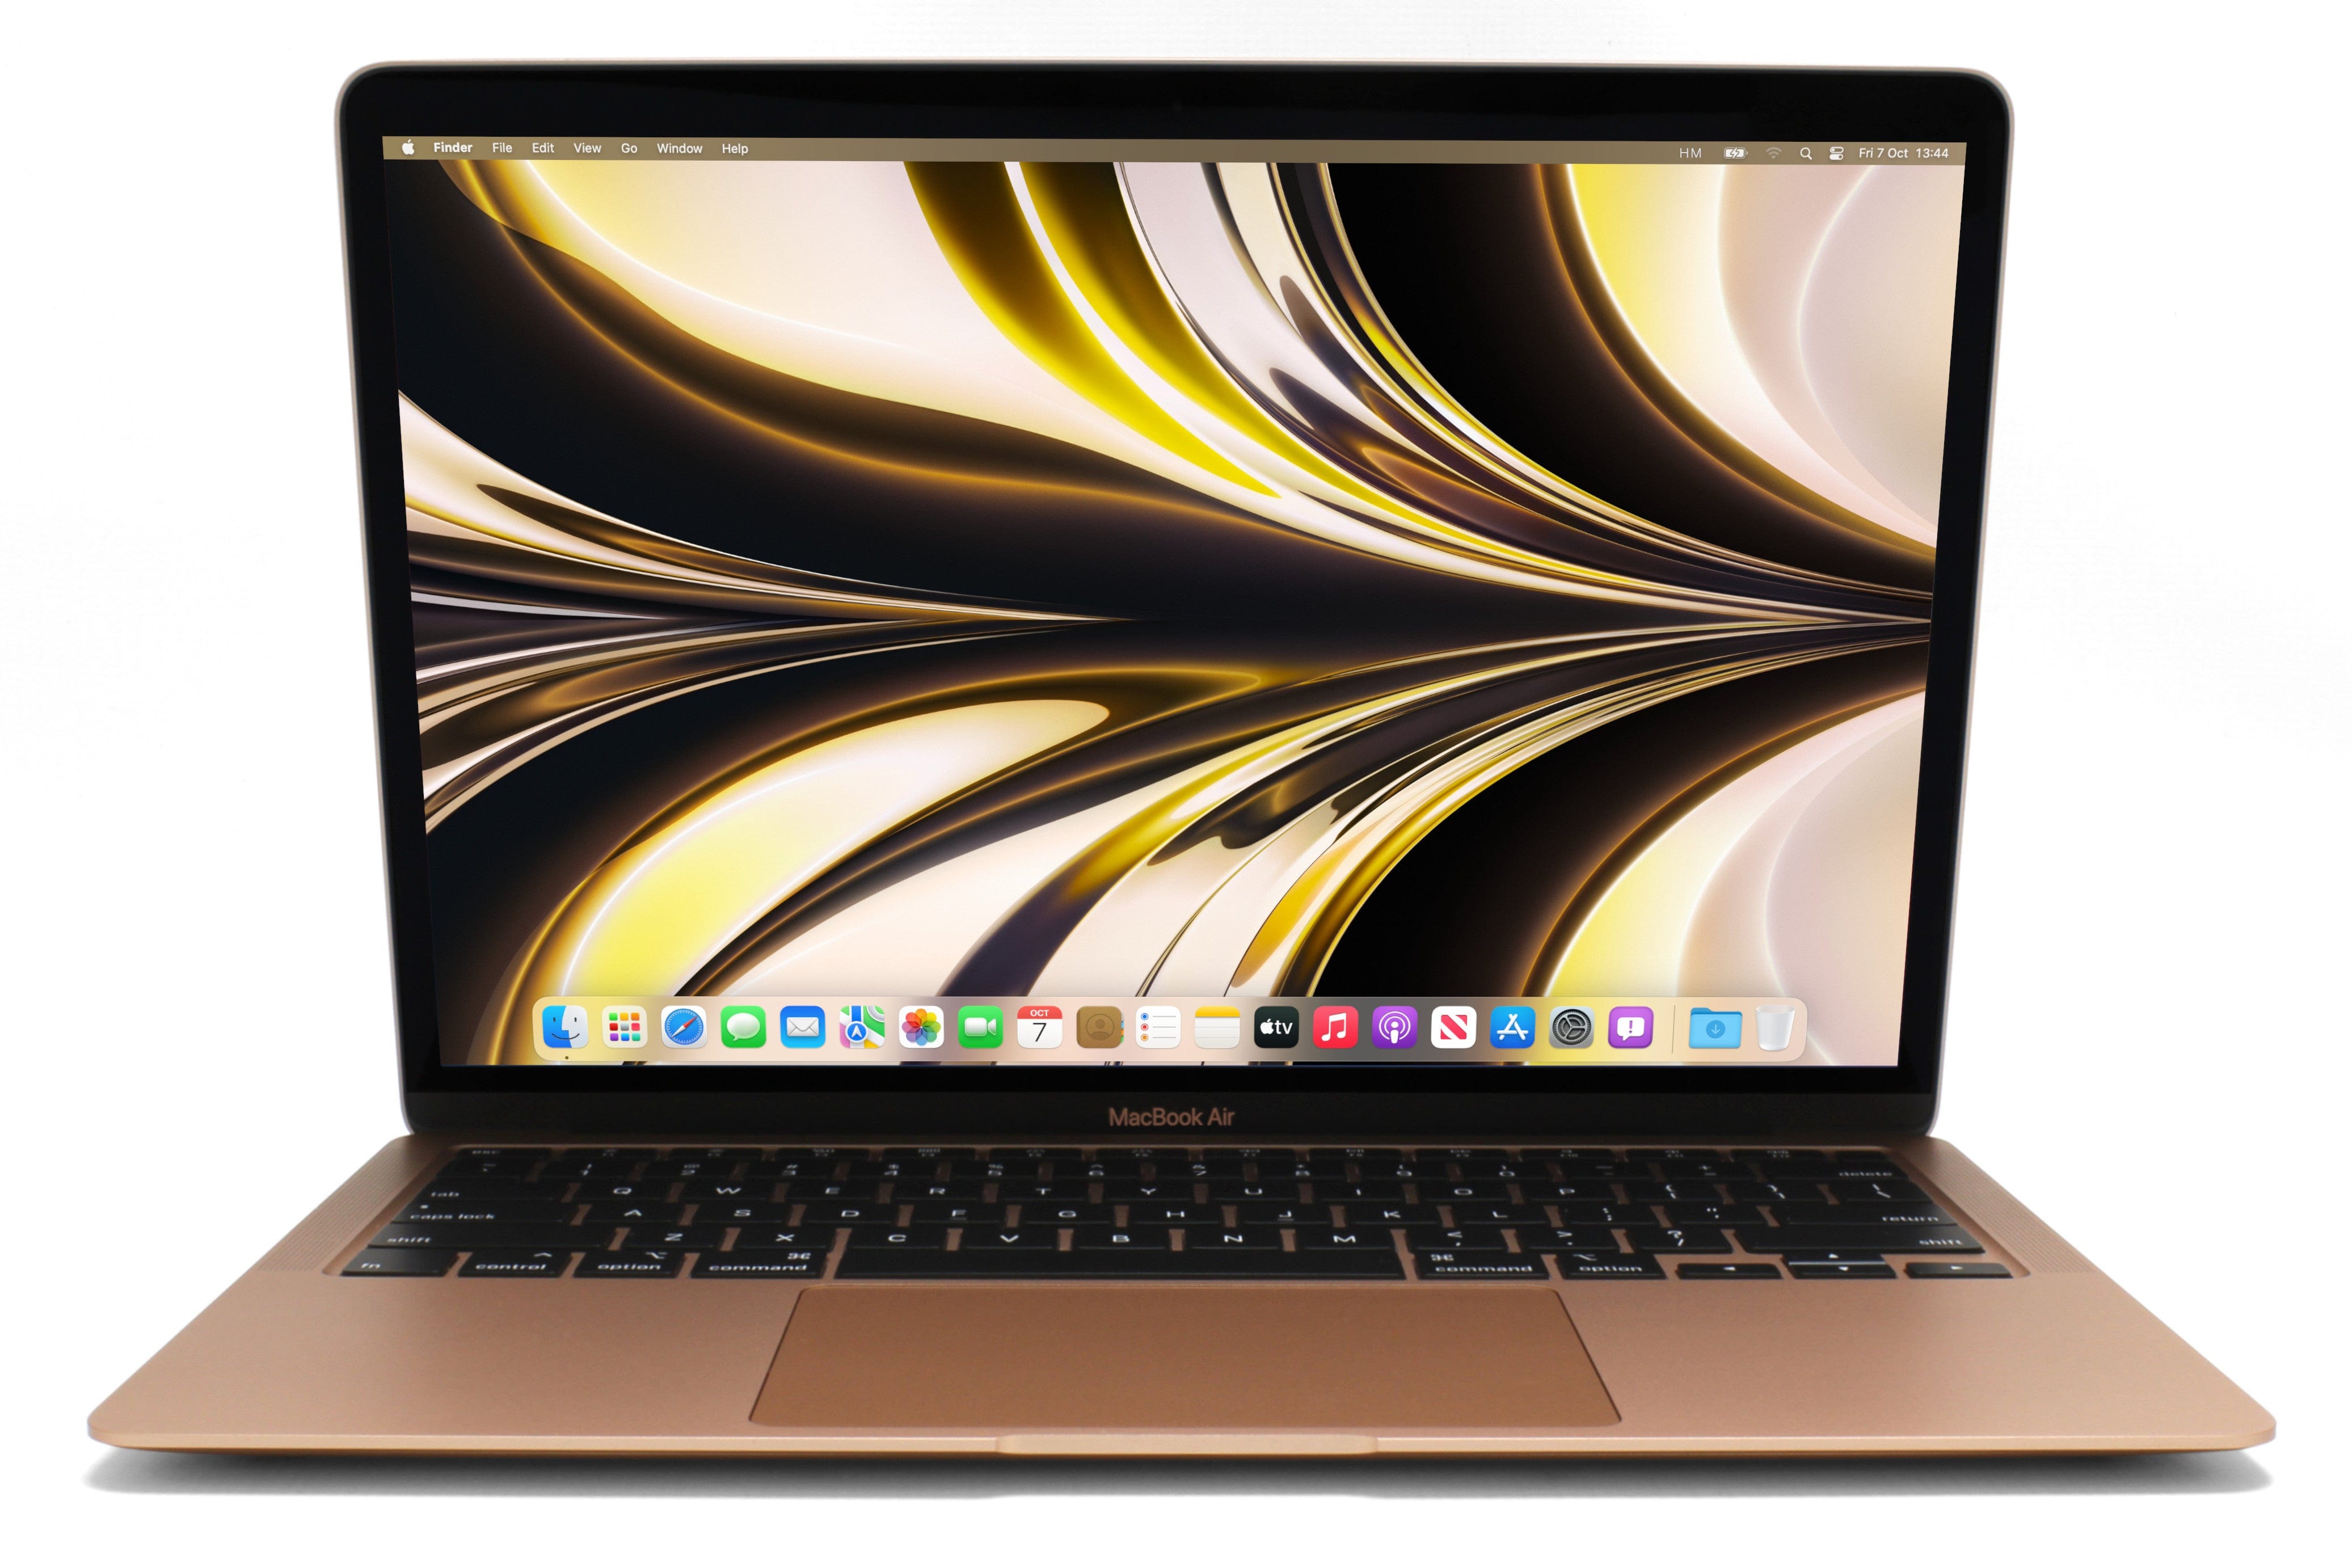 MacBook Air 13-inch M1 (Gold, 2020) - Excellent